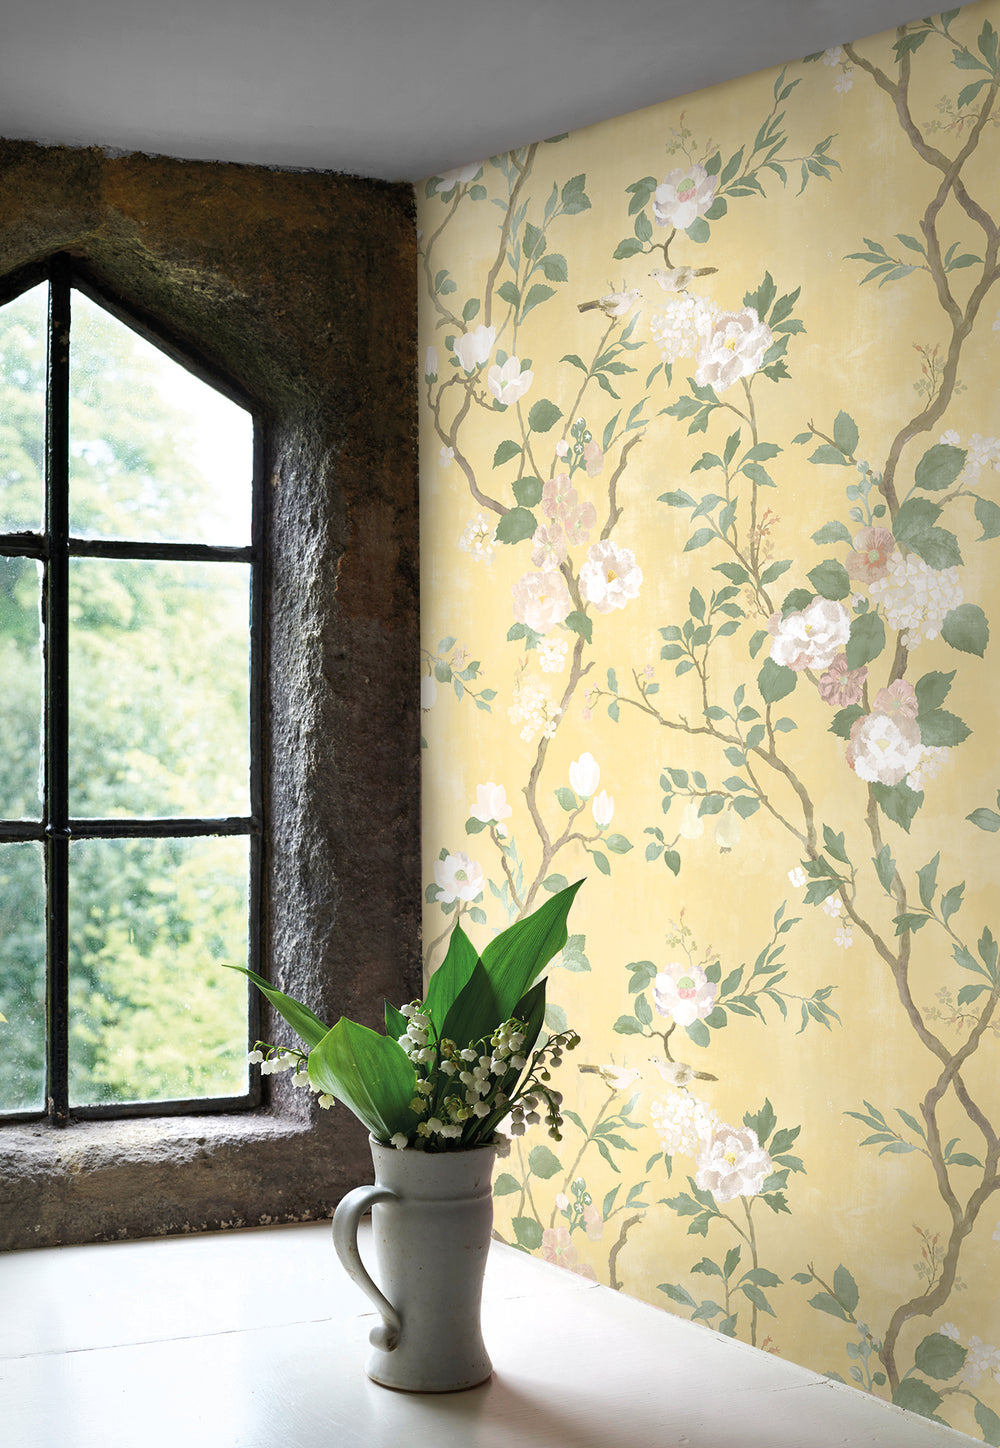 Flora-Roberts-Wallpaper-Hamilton-Weston-Peony-Garden-wall-mural-trailing-garden-prony-blossom-flowers-birds-pears-sunshine-yellow